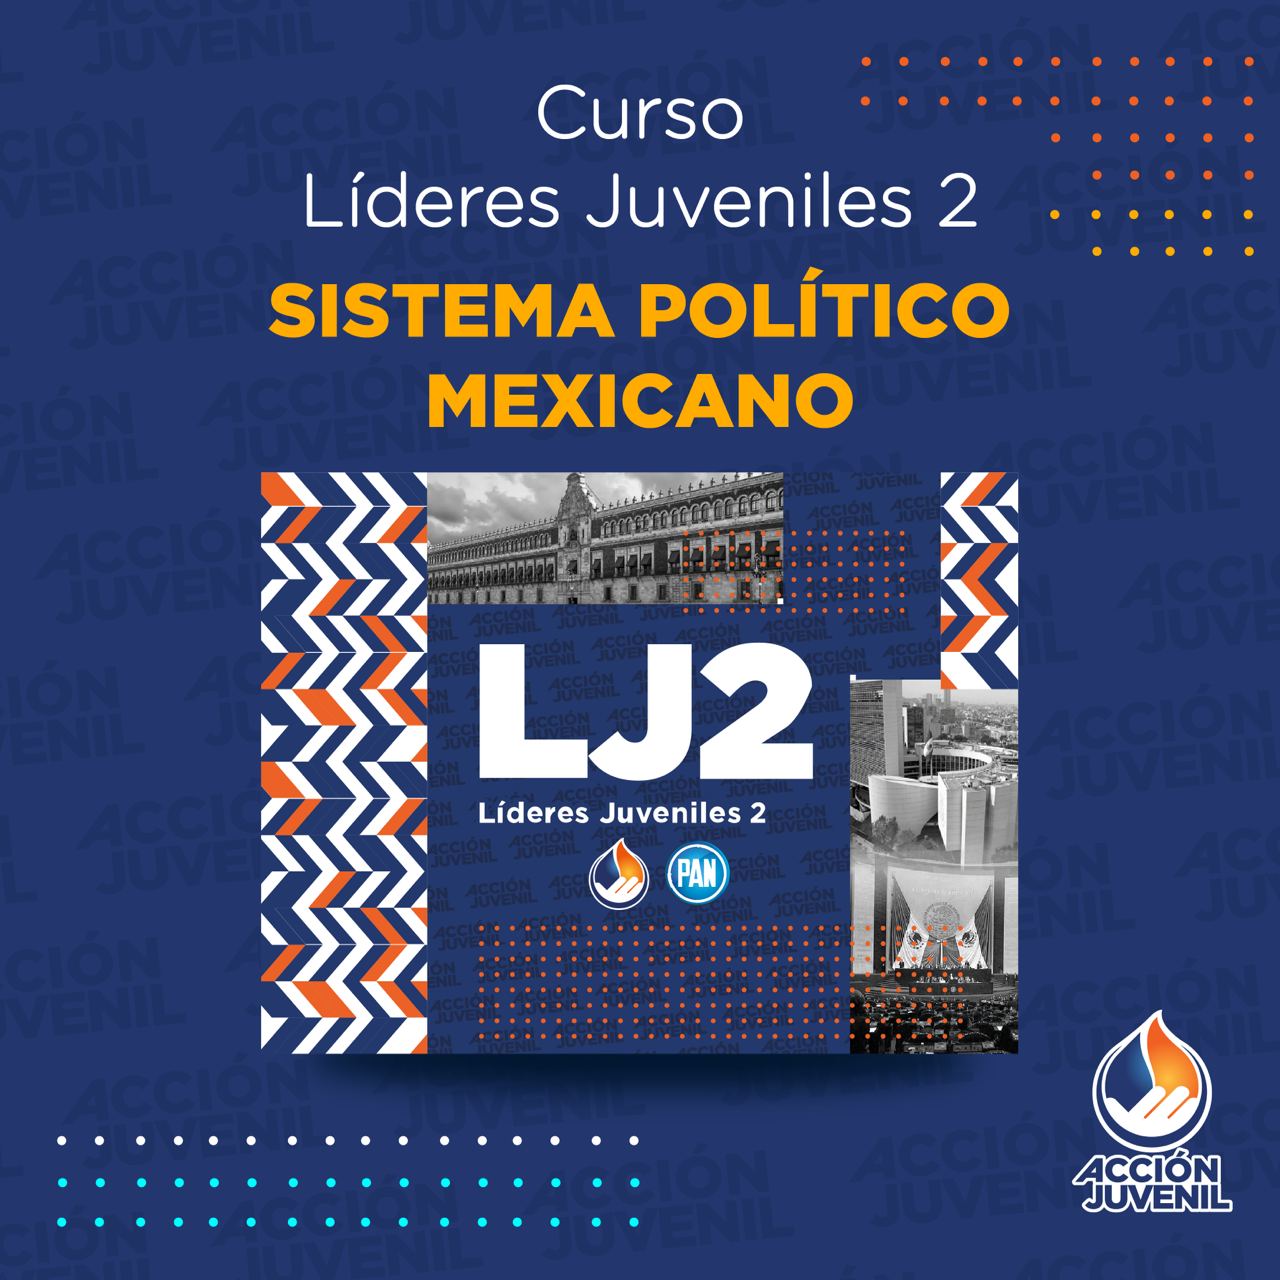 Curso Líderes Juveniles 2 Sistema Político Mexicano Delicias, CHH 19/11/22